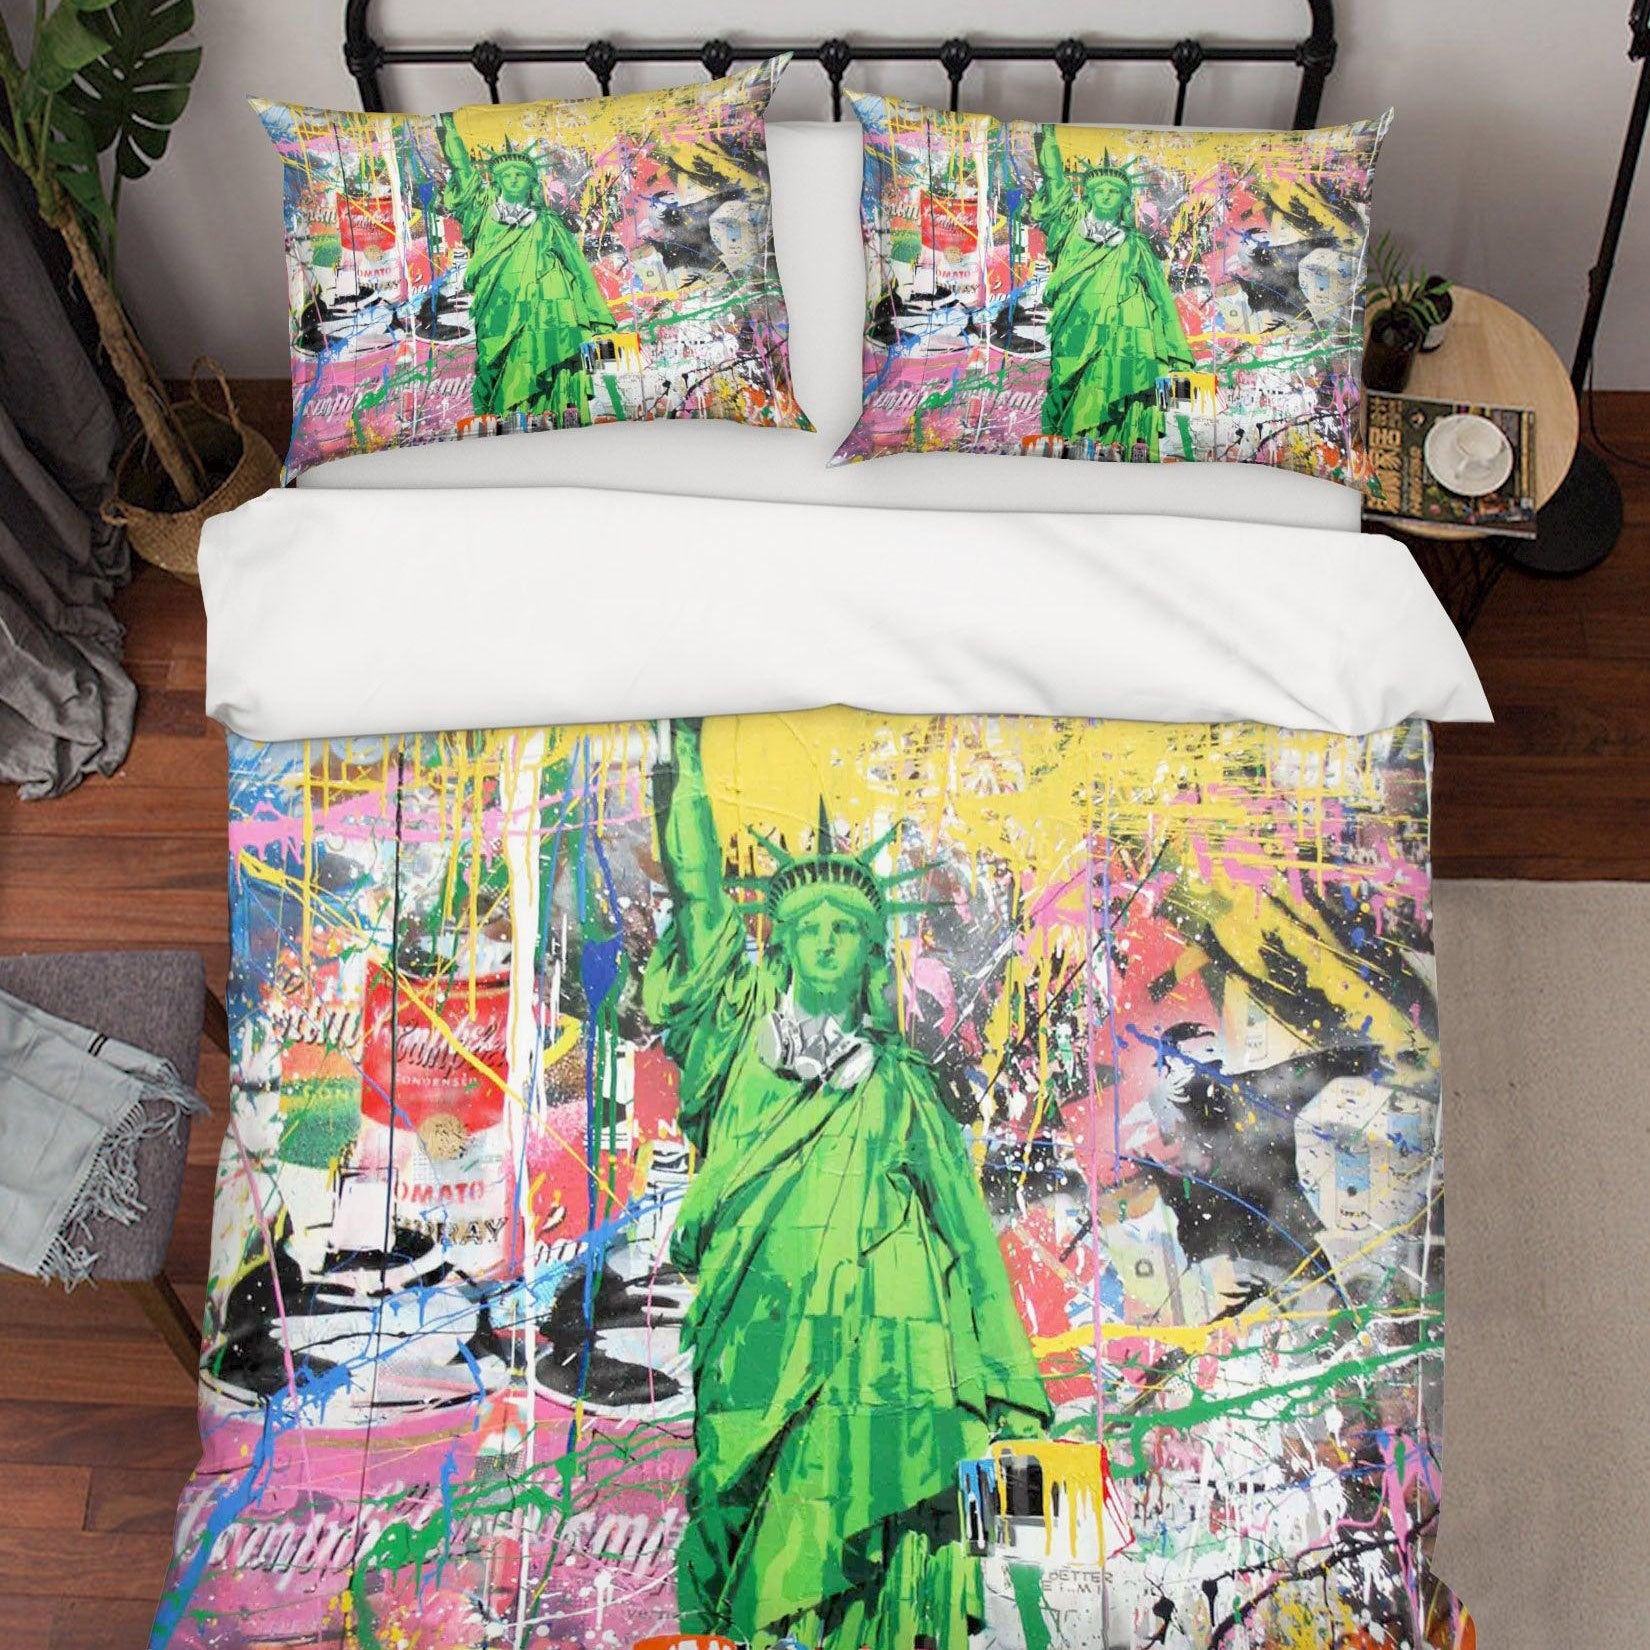 3D  Liberty Green Quilt Cover Set Bedding Set Duvet Cover Pillowcases  ZY D83- Jess Art Decoration